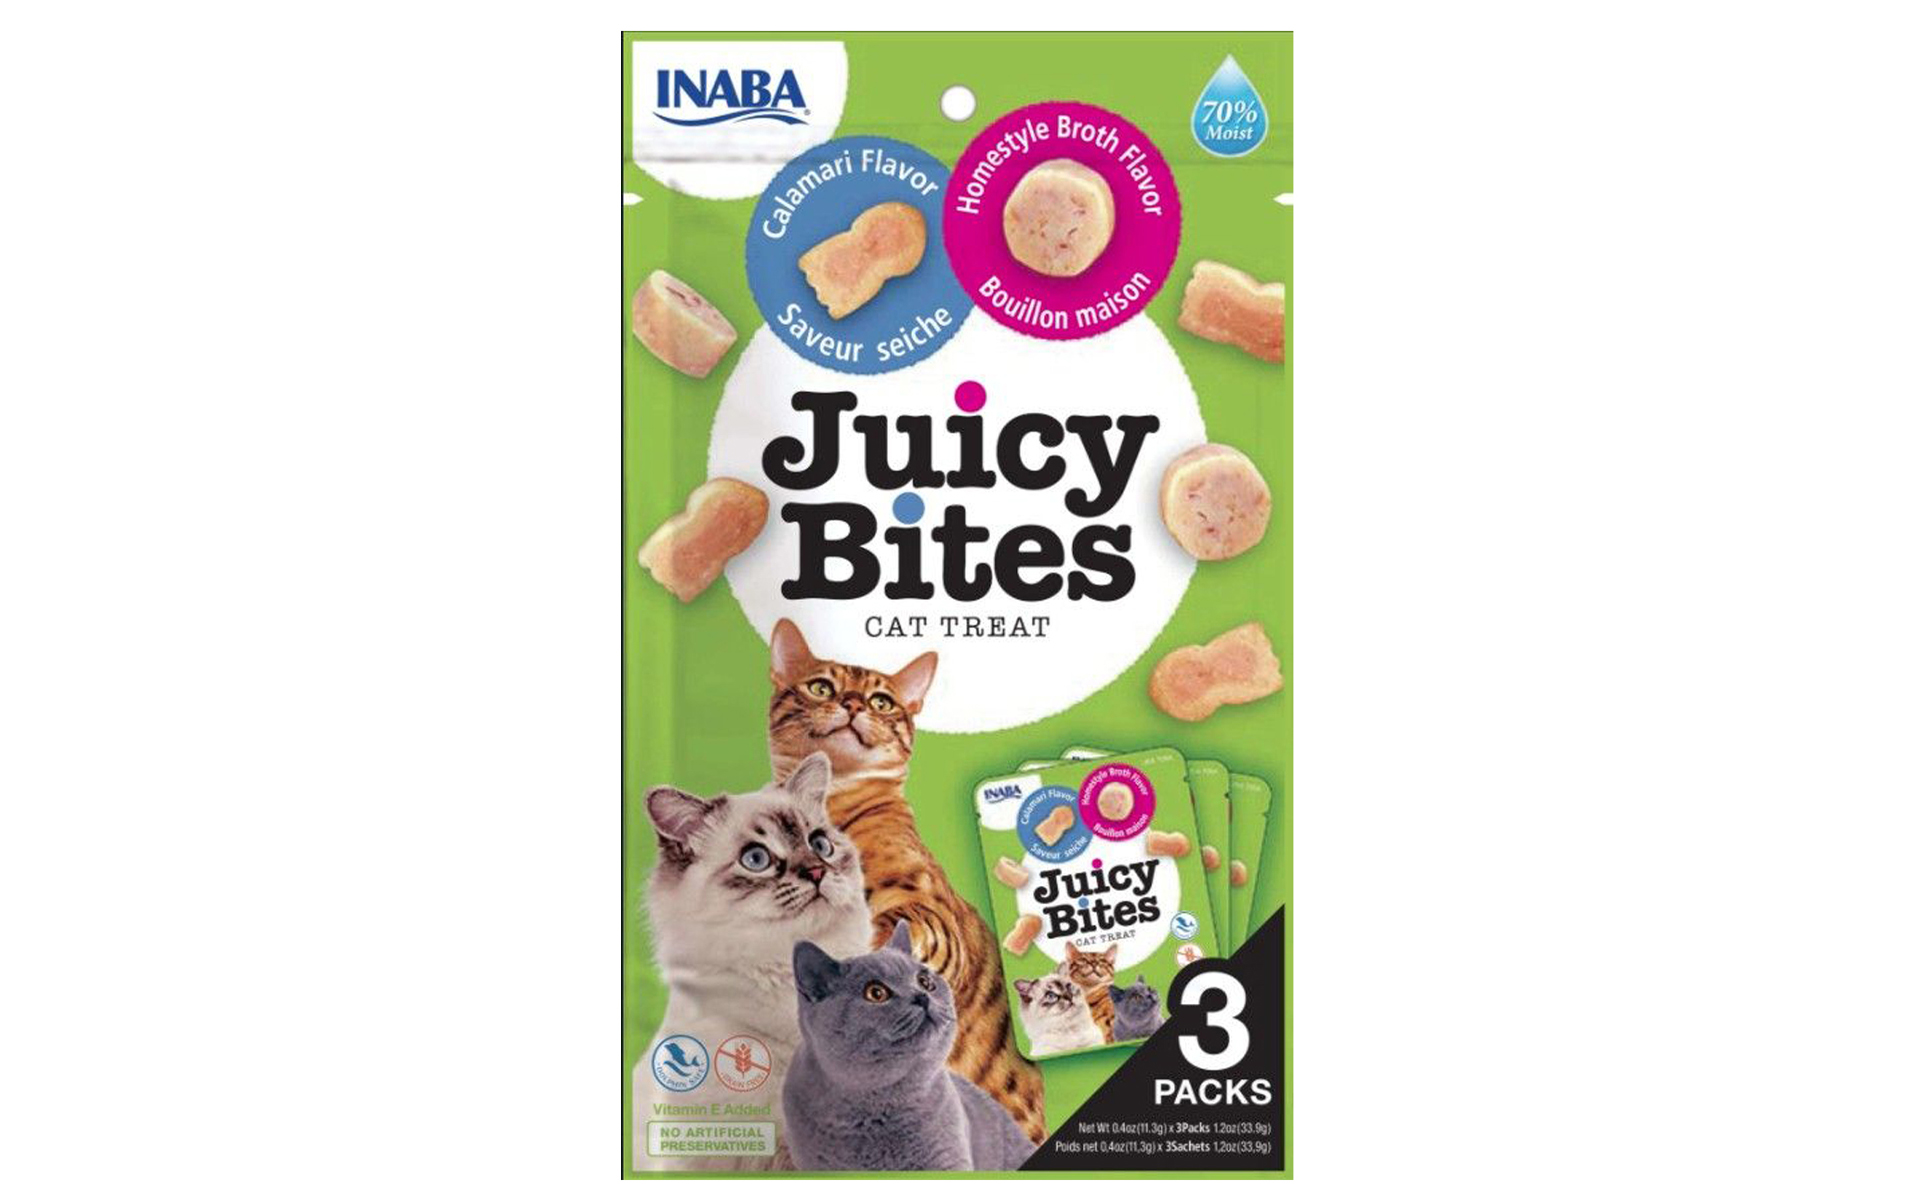 Juicy Bites Cat Treat Homestyle Broth & Calamari Flavor -3PK